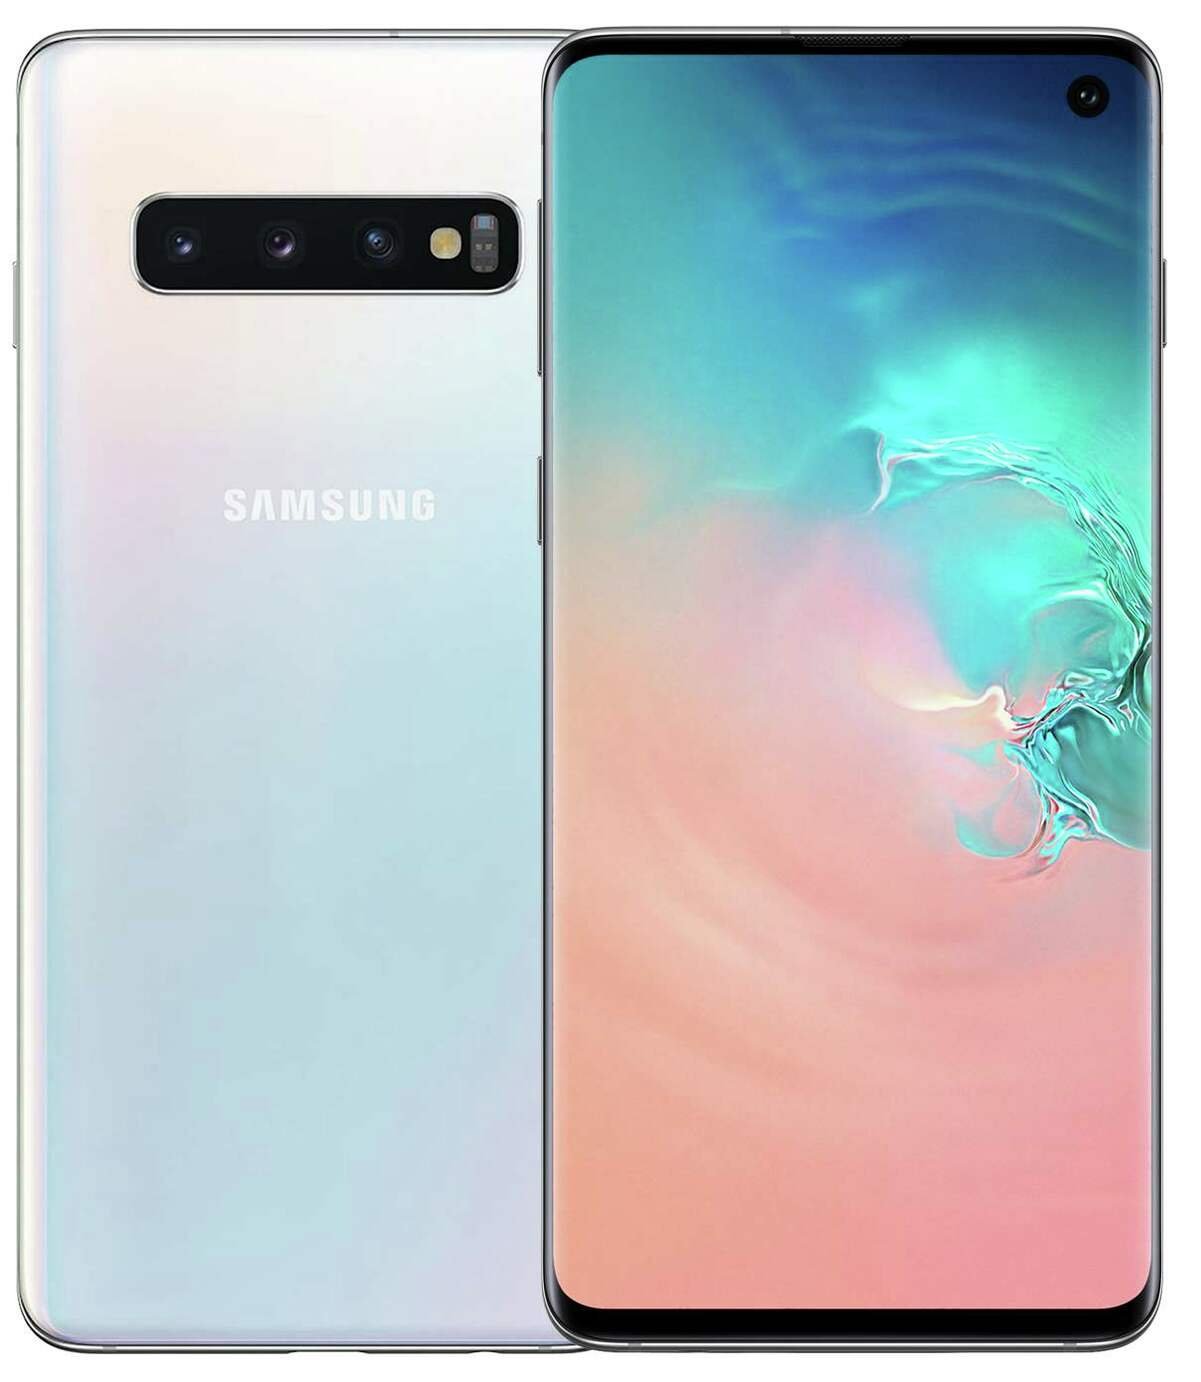 SIM Free Refurbished Samsung S10 128GB Mobile Phone - White